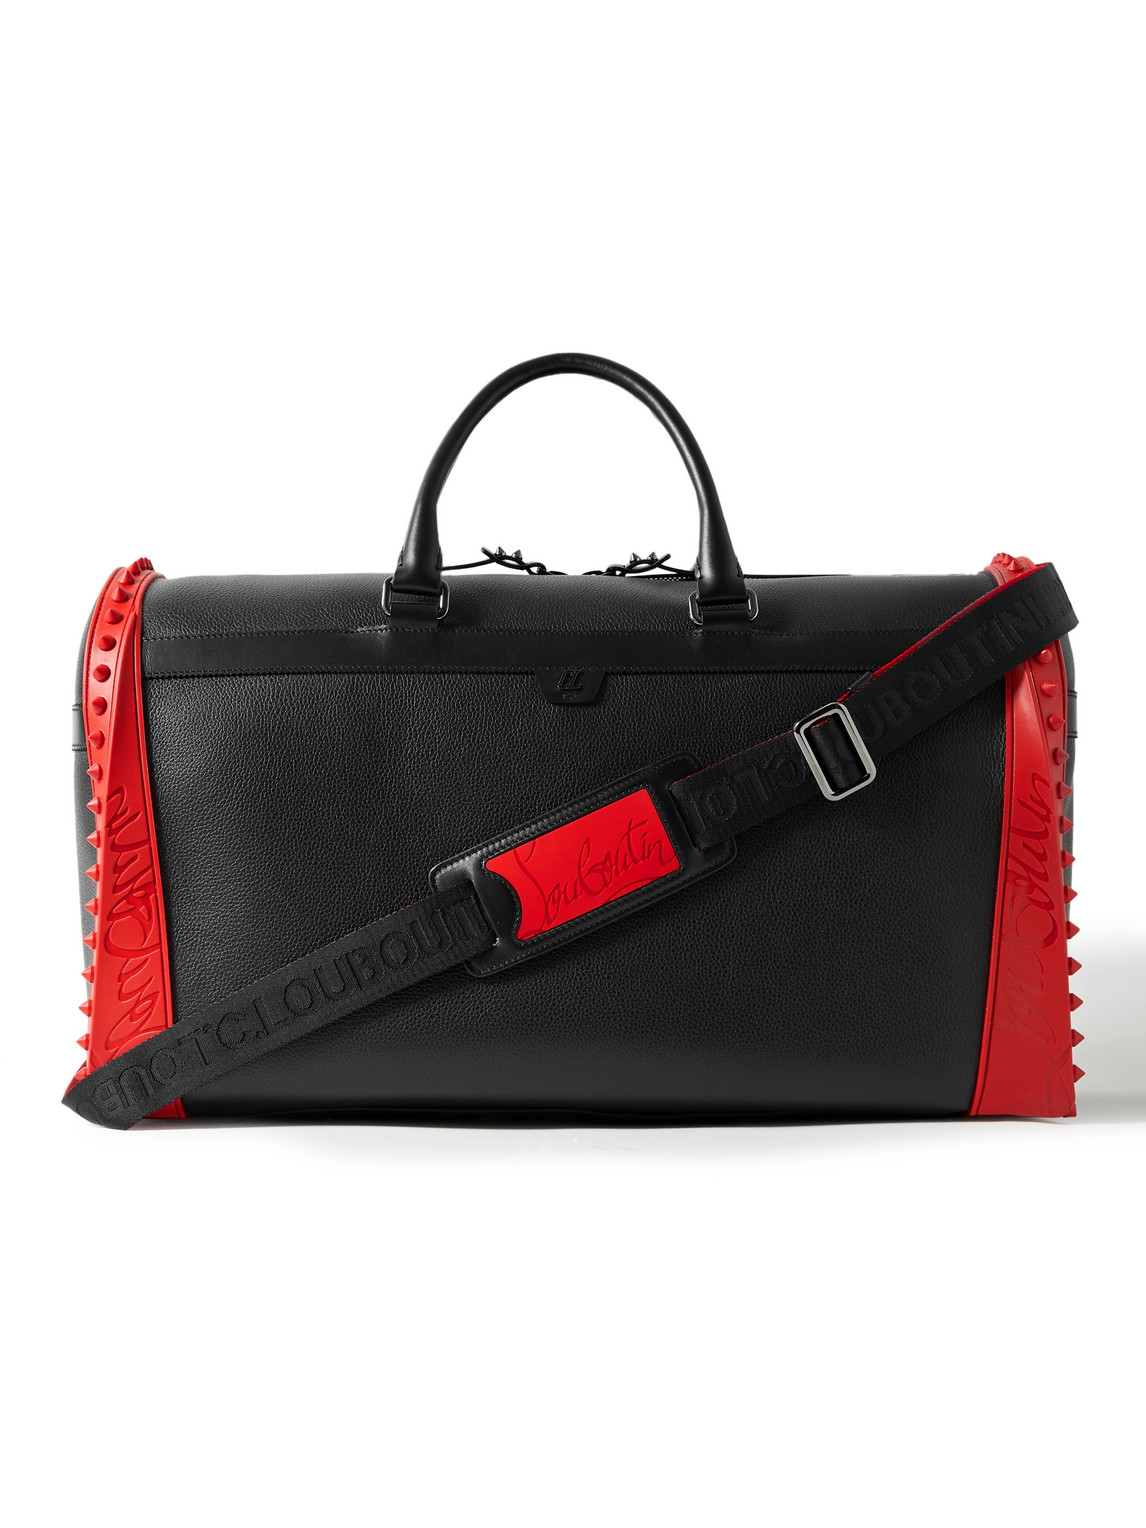 Christian Louboutin - Sneakender Studded Rubber-Trimmed Full-Grain Leather Weekend Bag - Men - Black